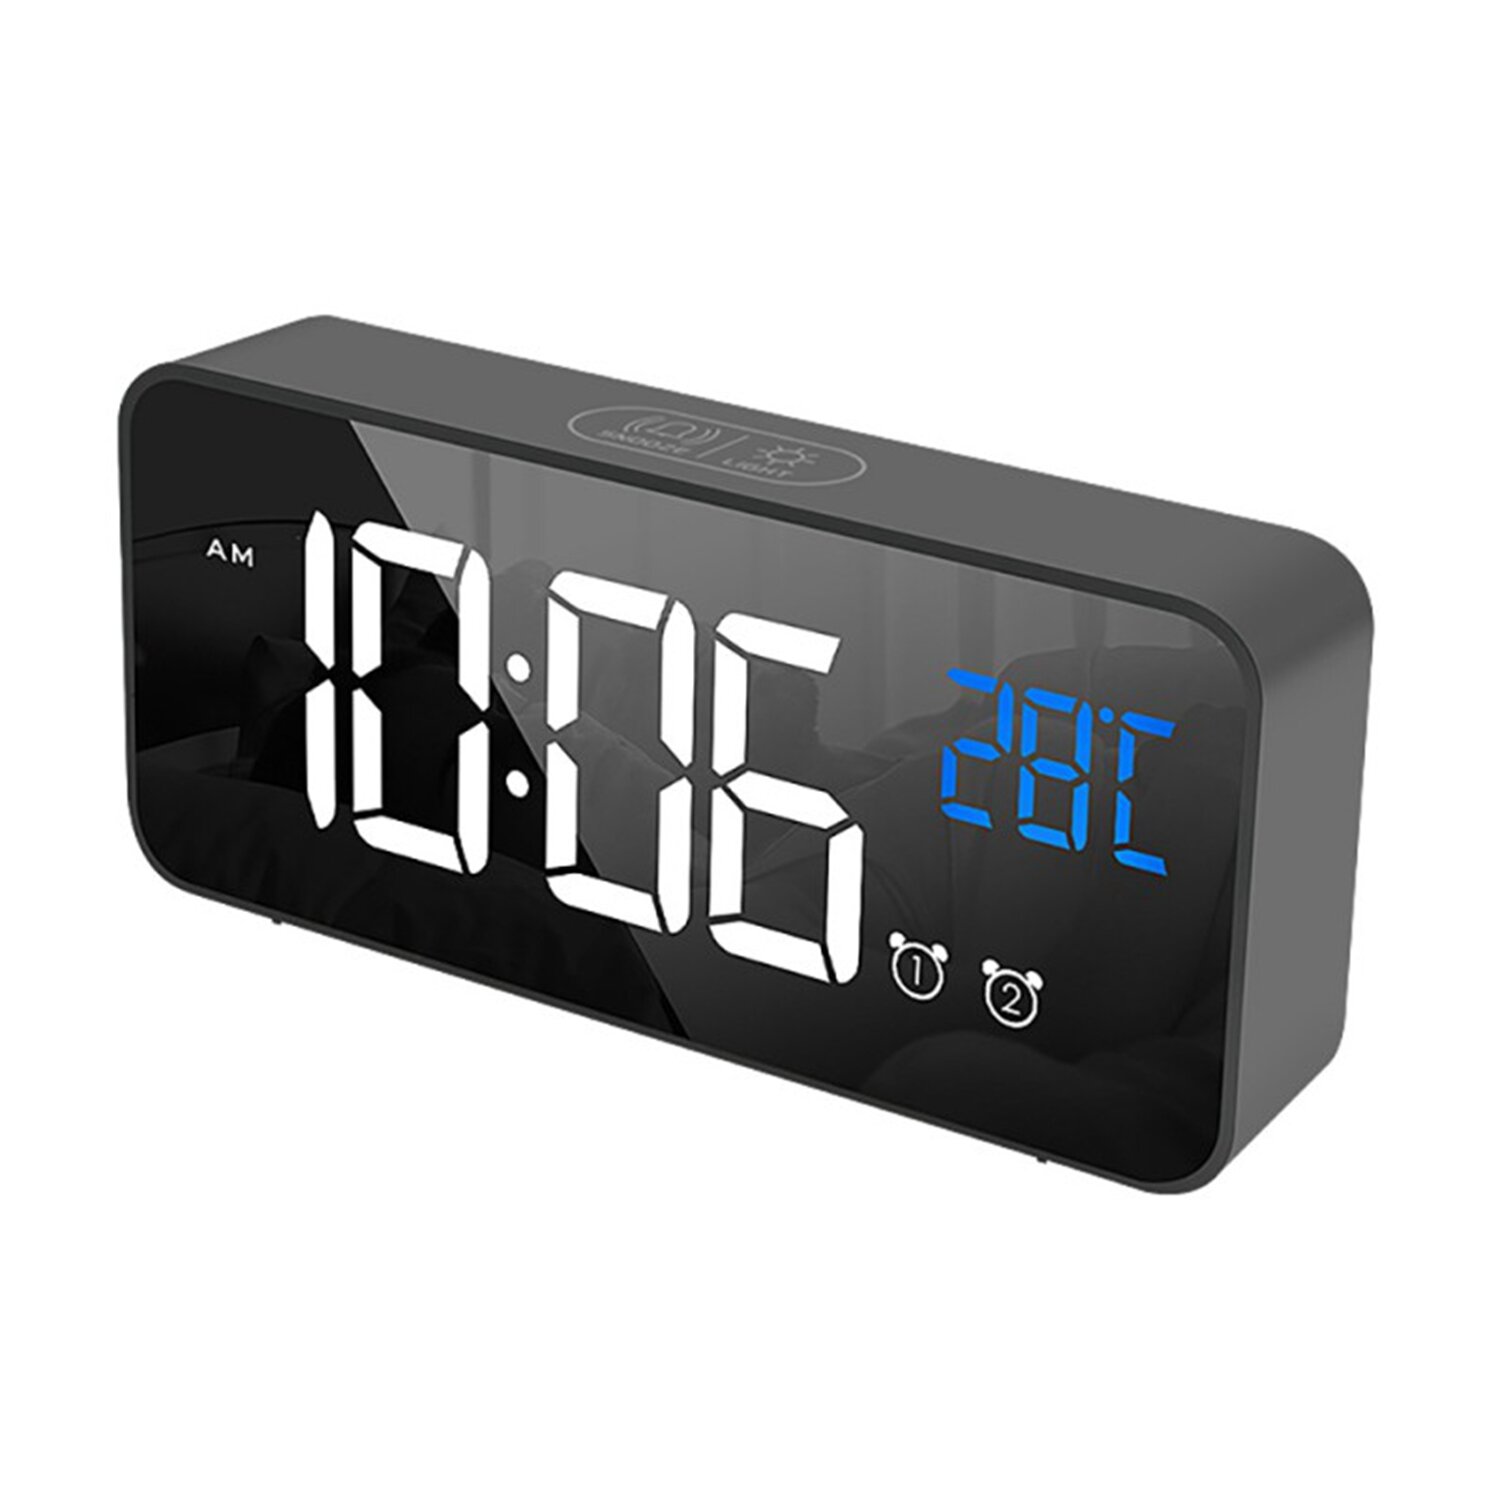 Quartz LCD Touch Sensitive Snooze and Light Features  Alarm Clock Black/ White 